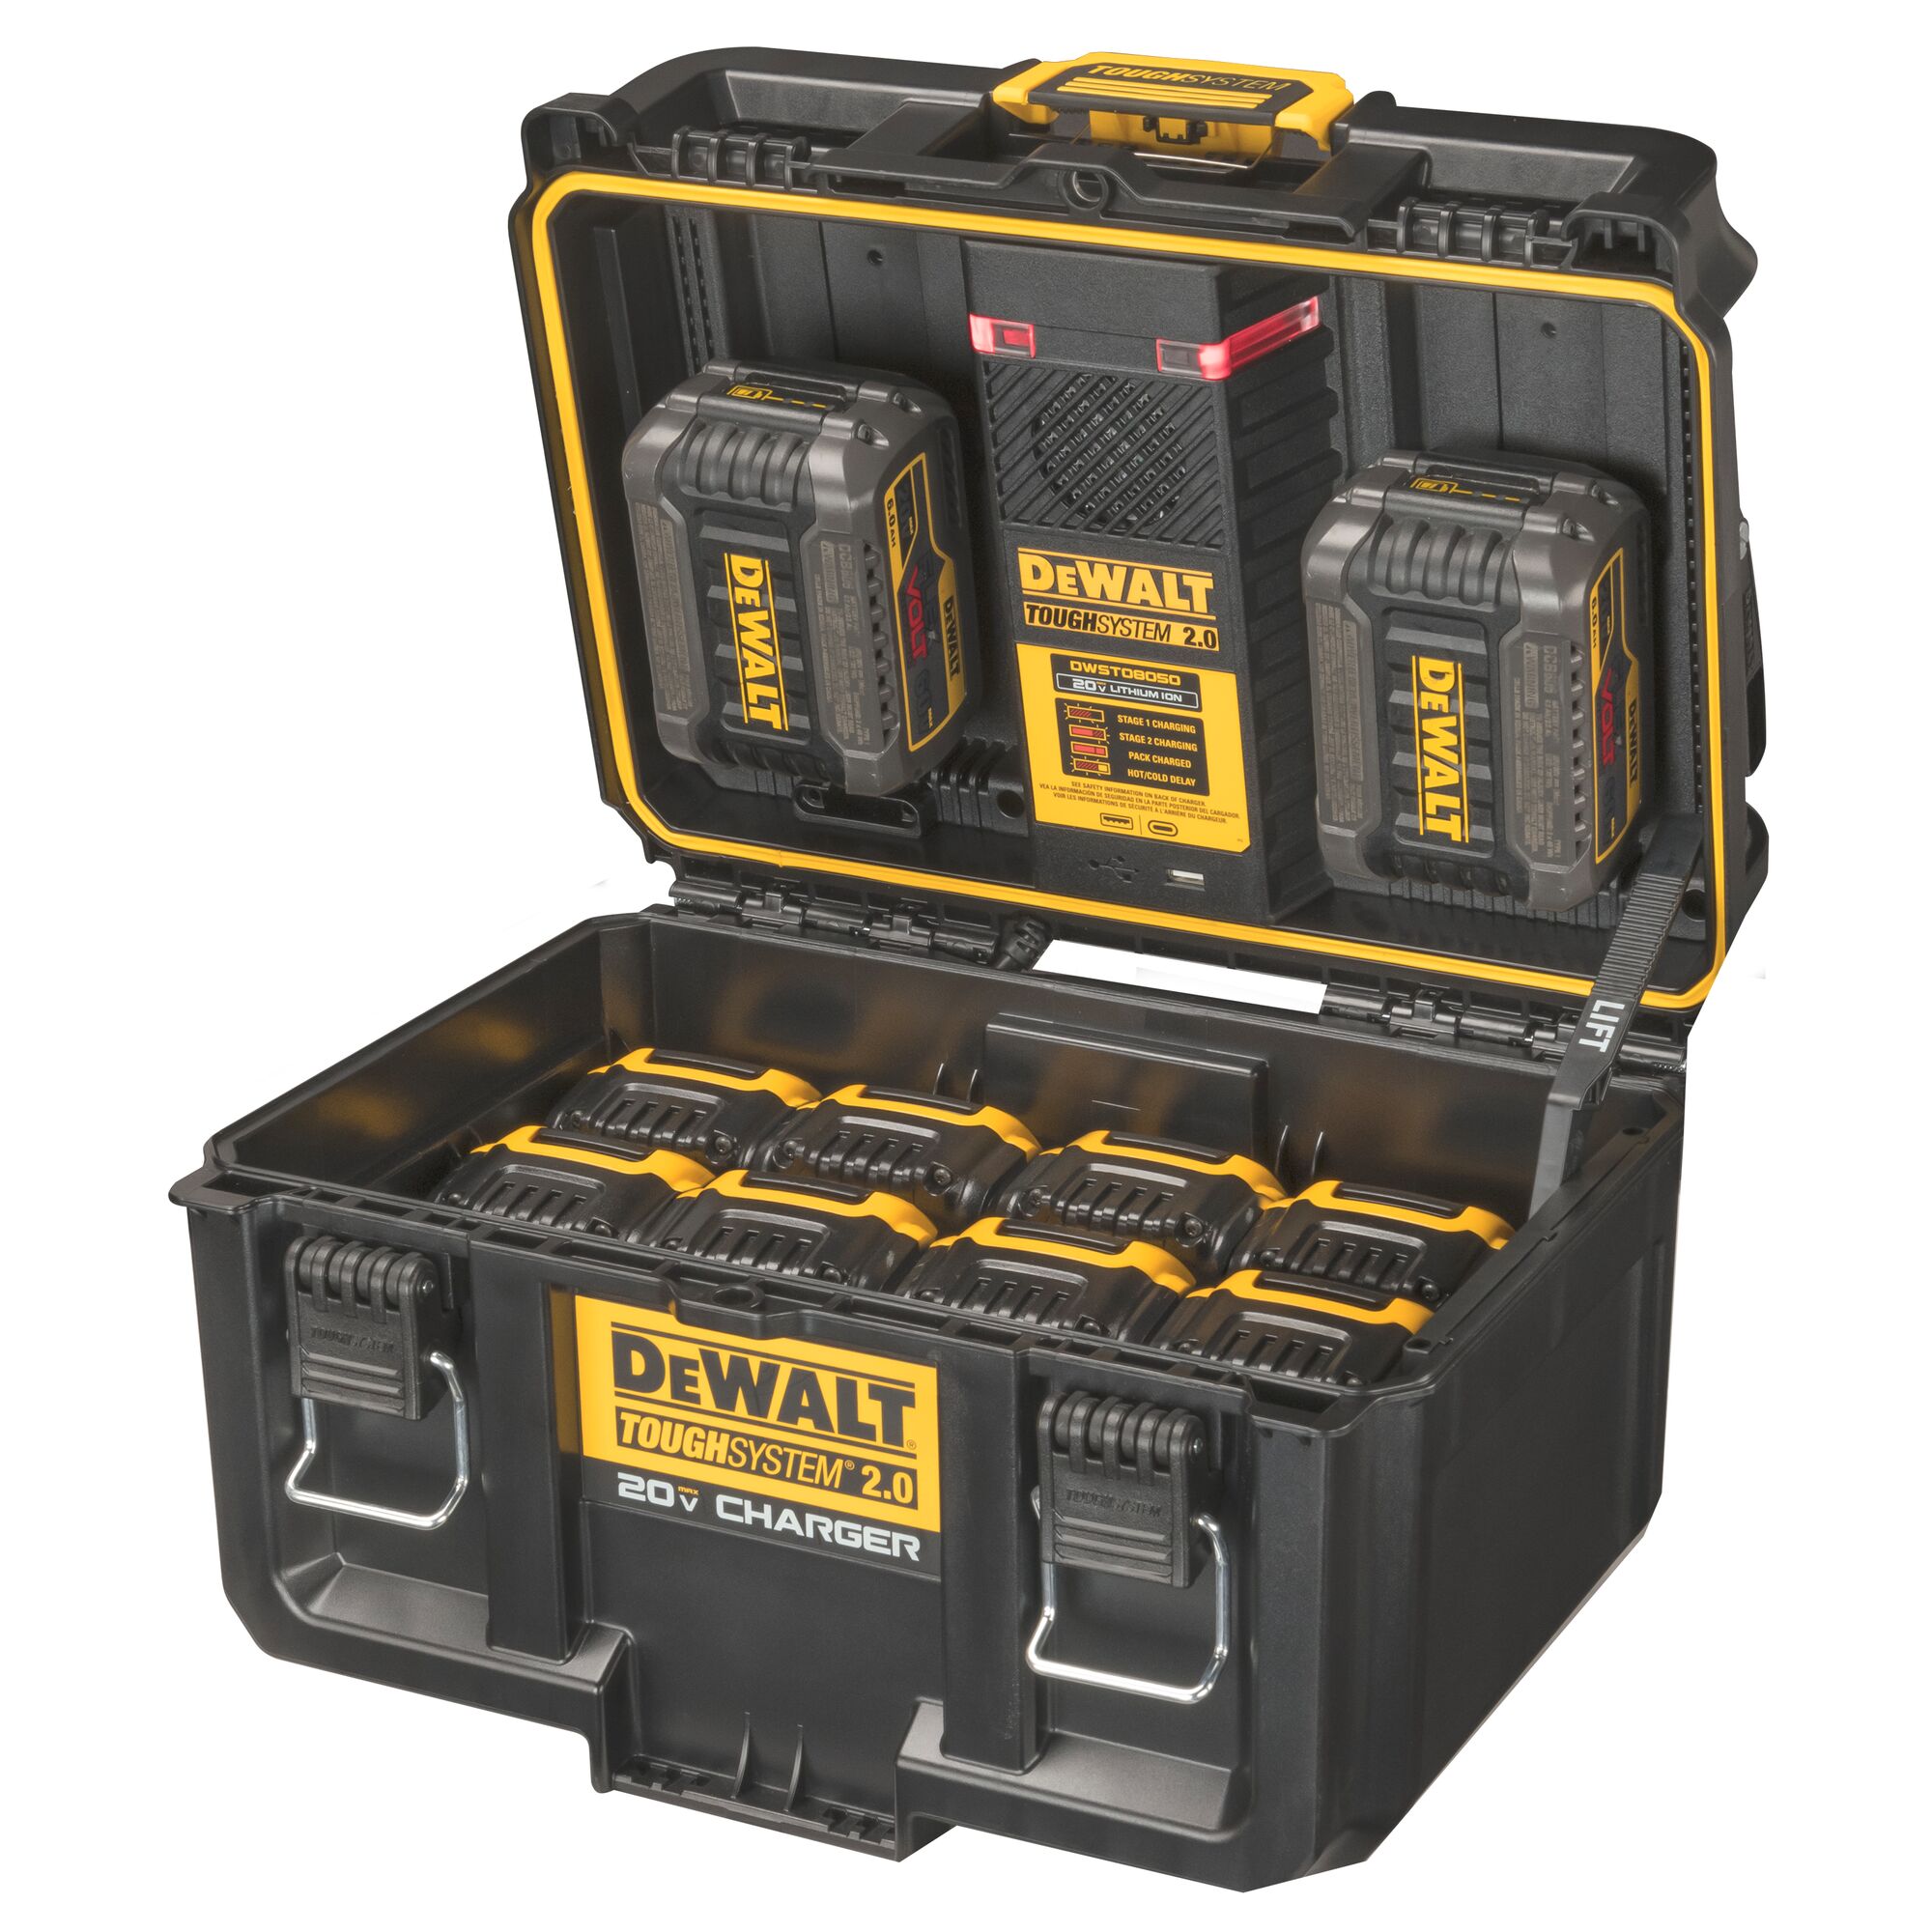 How to Store Dewalt Batteries